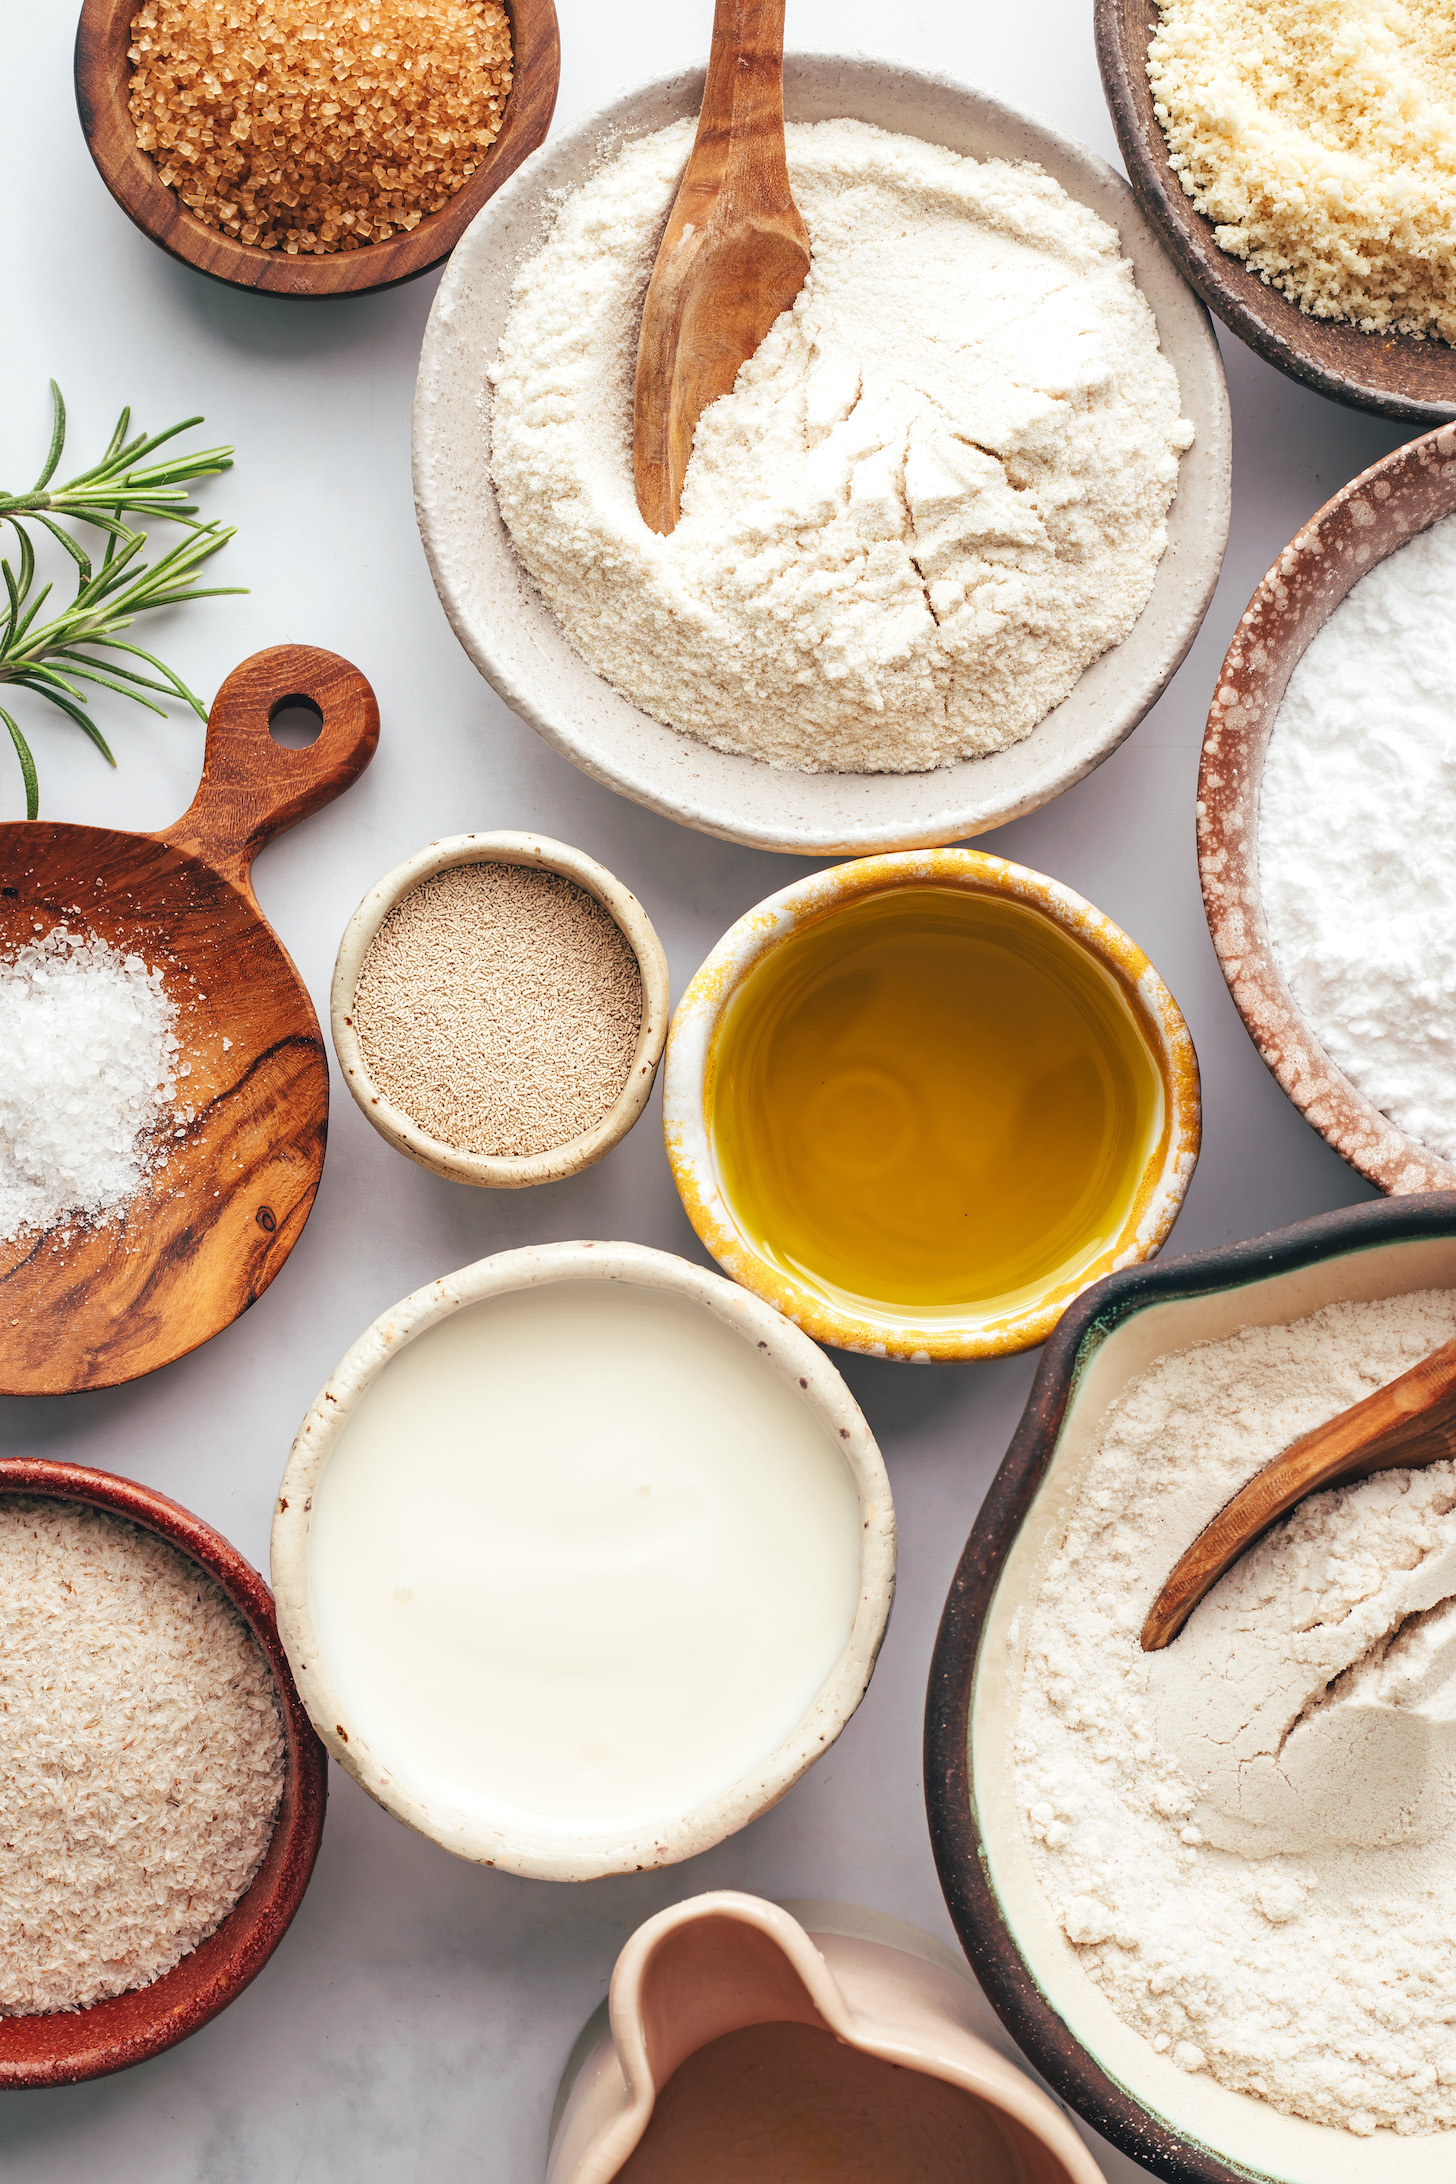 Cane sugar, brown rice flour, almond flour, potato starch, sorghum flour, olive oil, yeast, coconut yogurt, psyllium husk, and salt